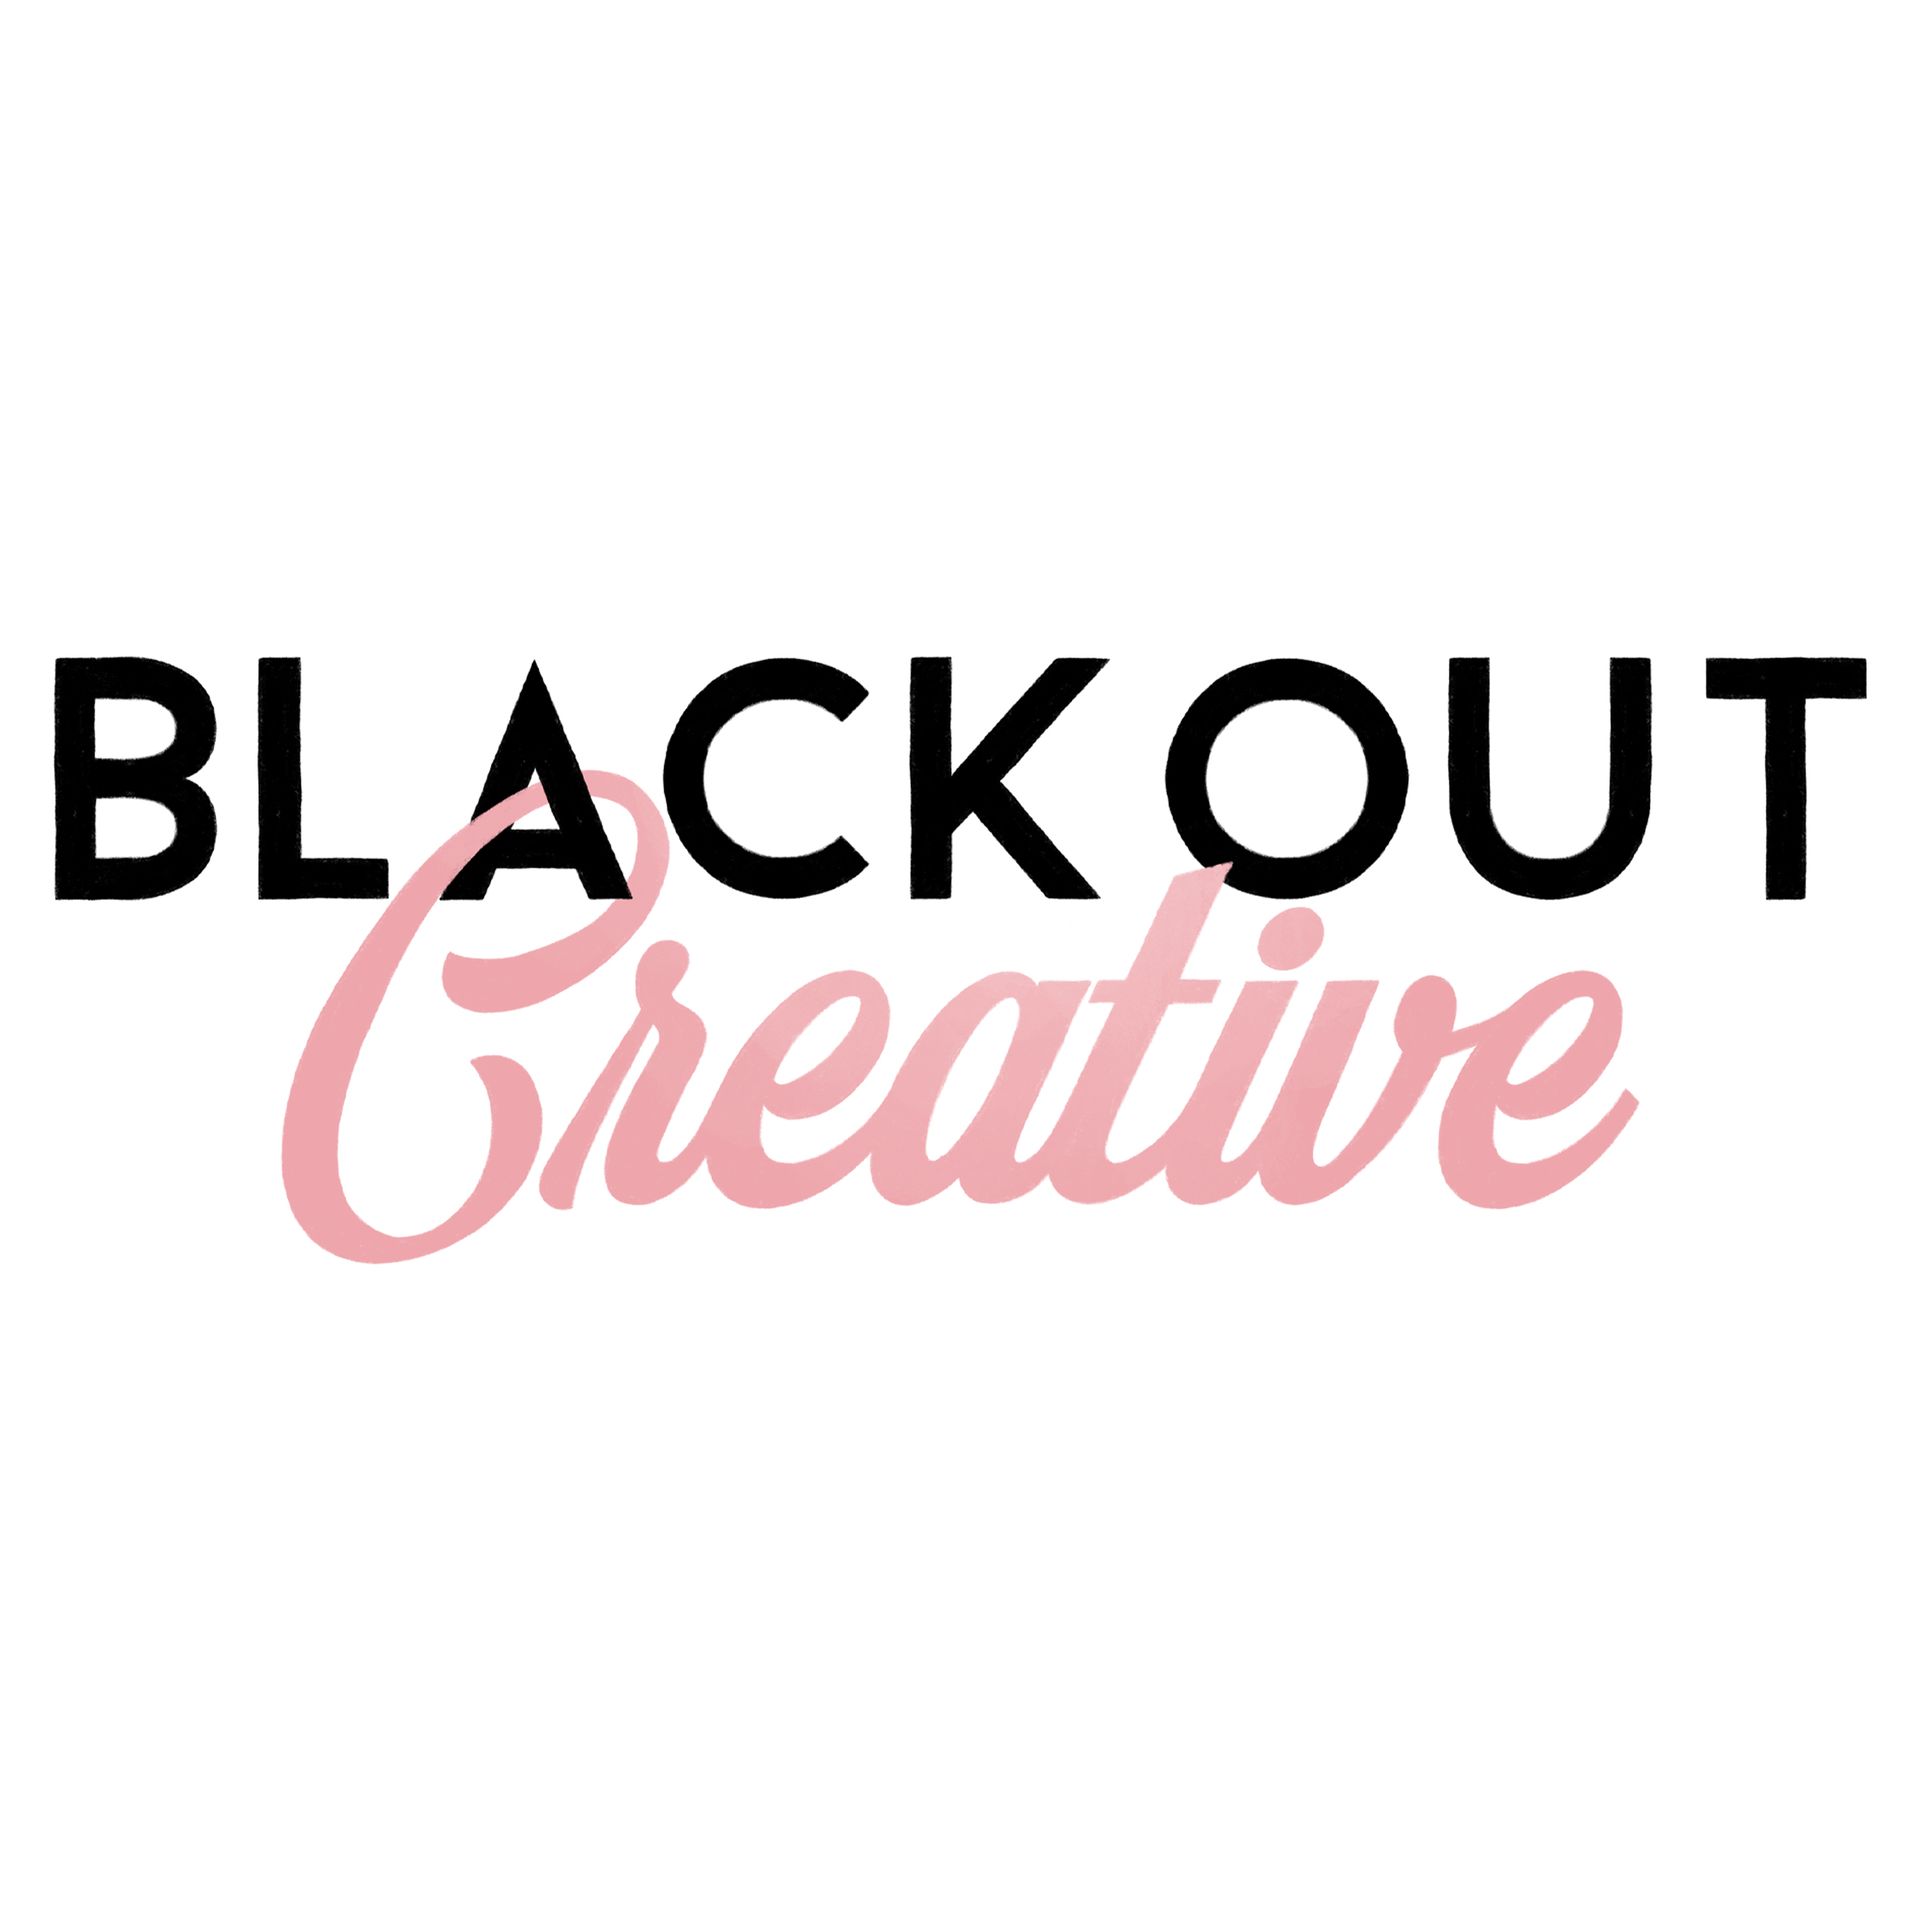 Blackout Creative